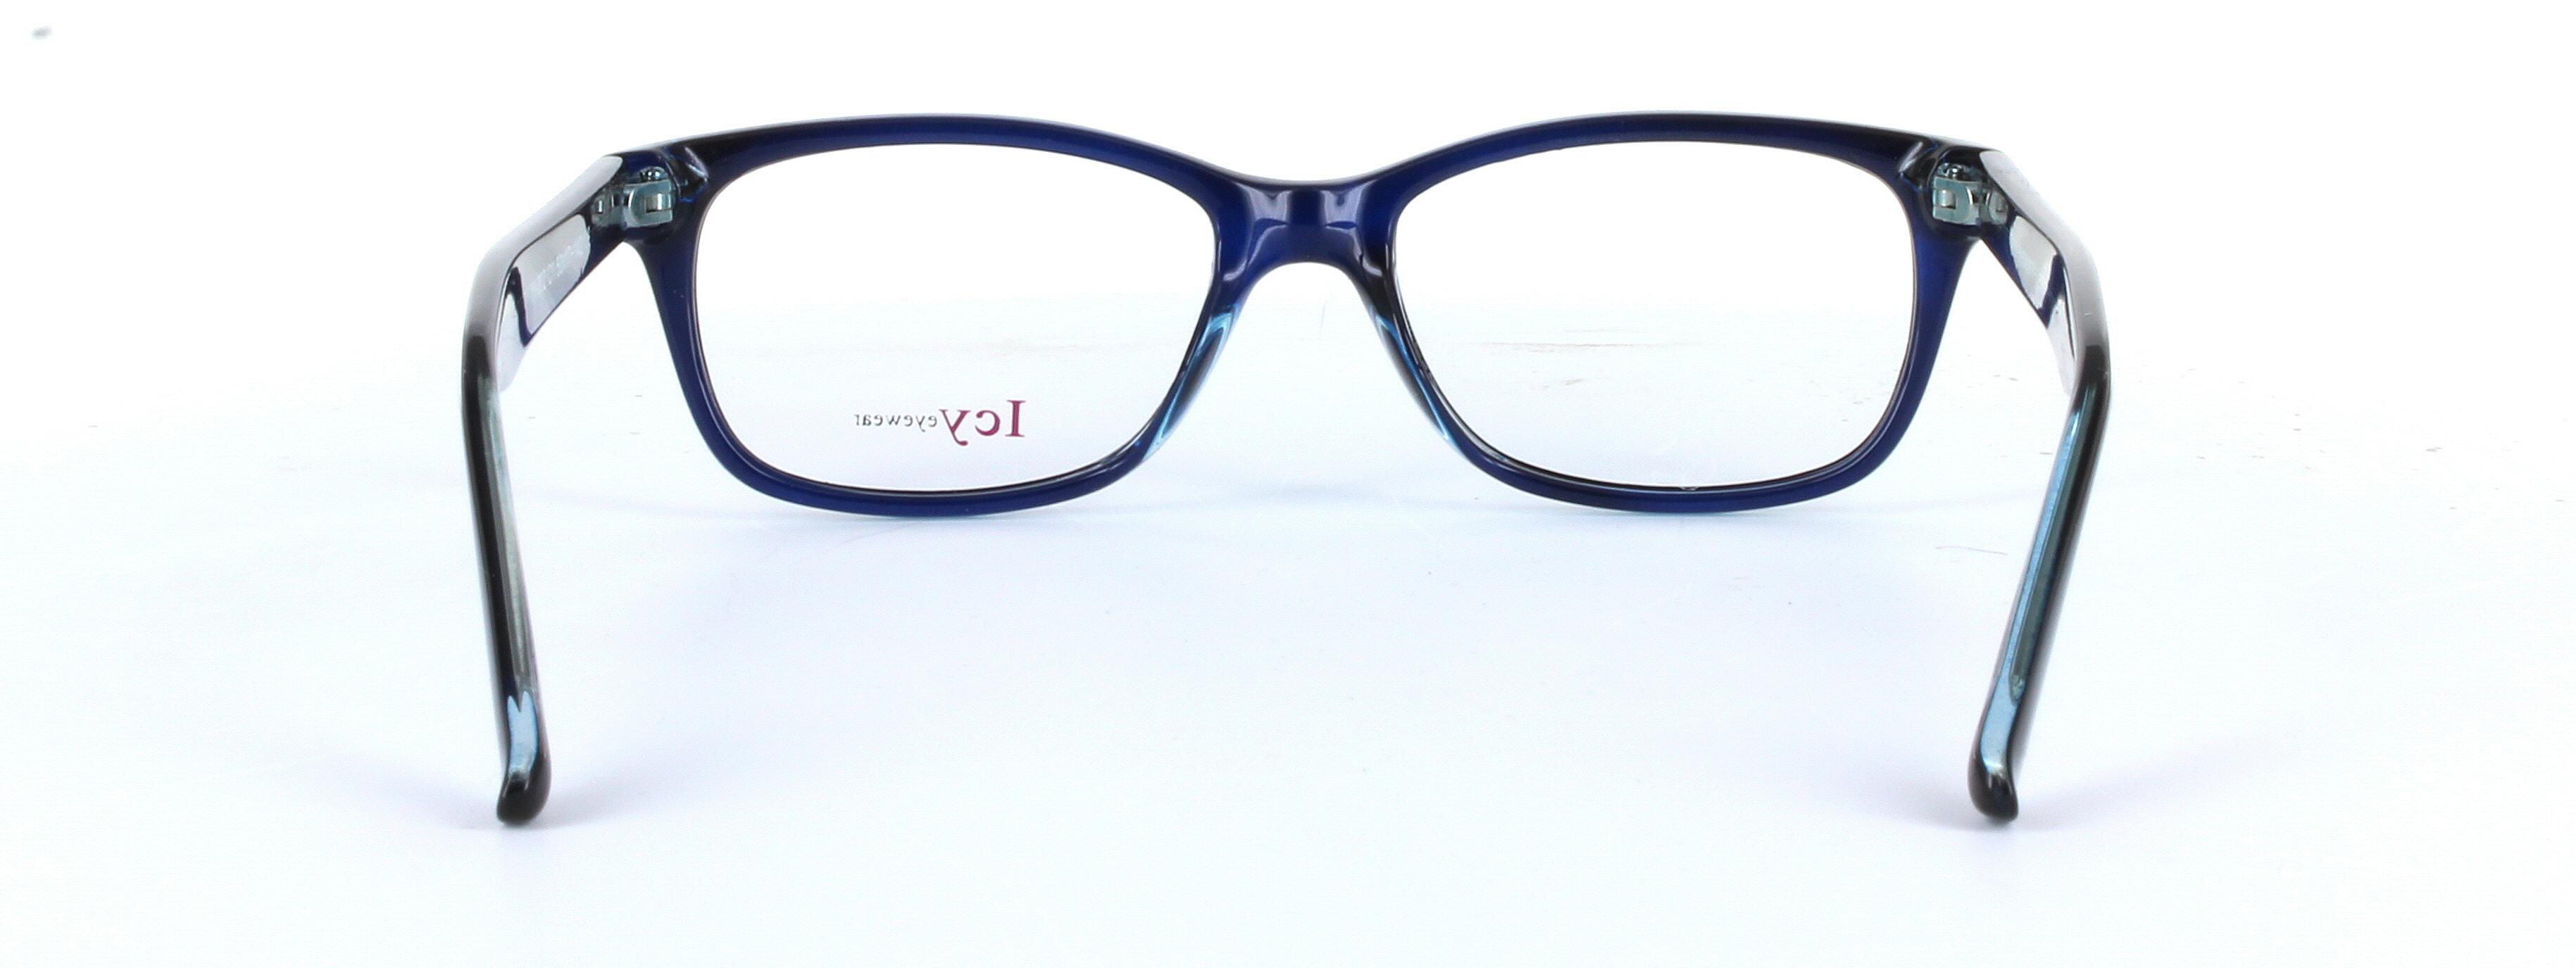 Bailey Blue Rim Oval Square Plastic Glasses - Image View 3